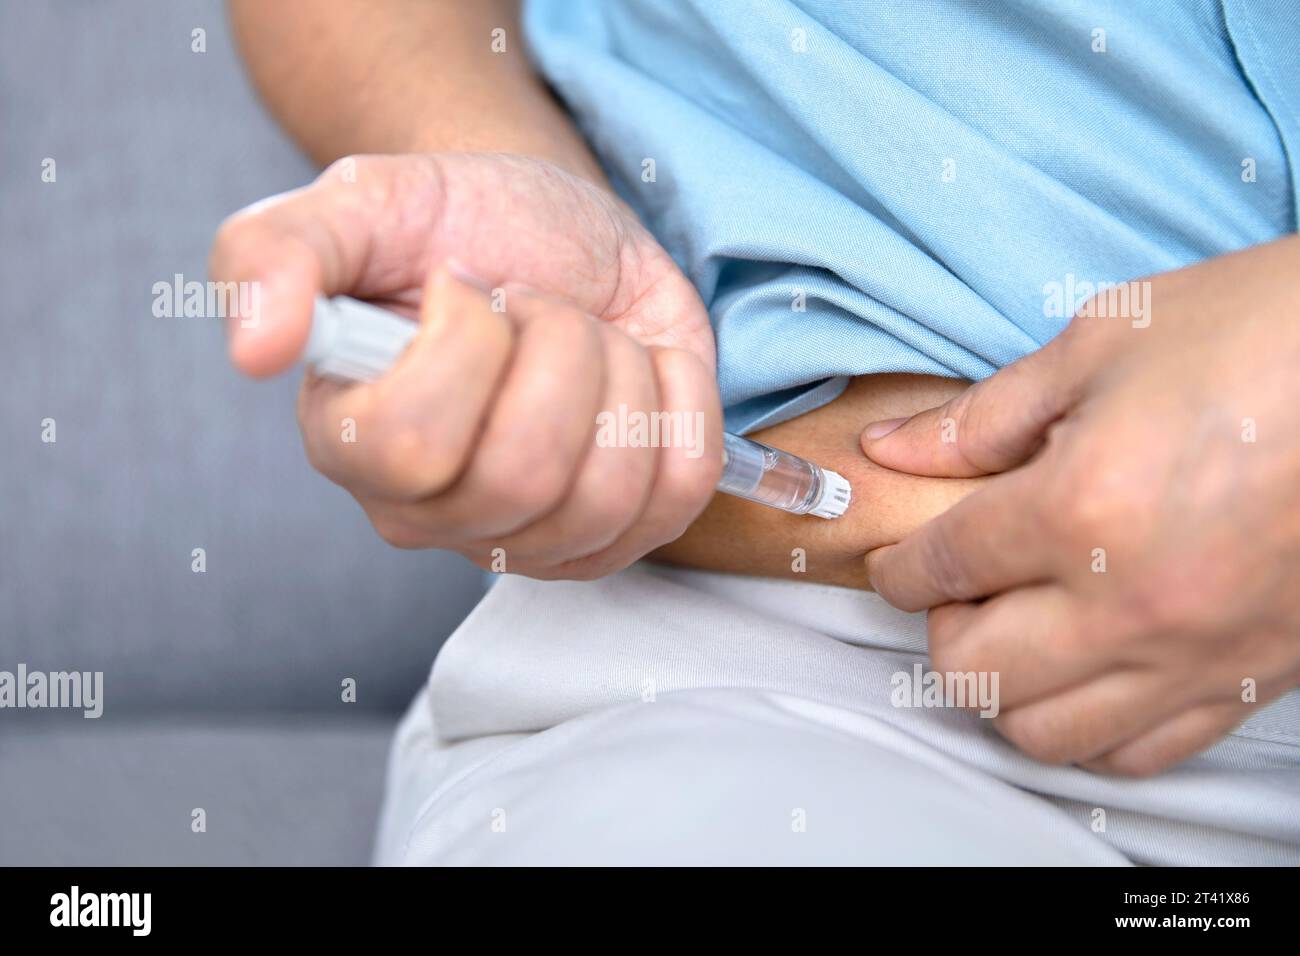 Man self-injecting Stock Photo